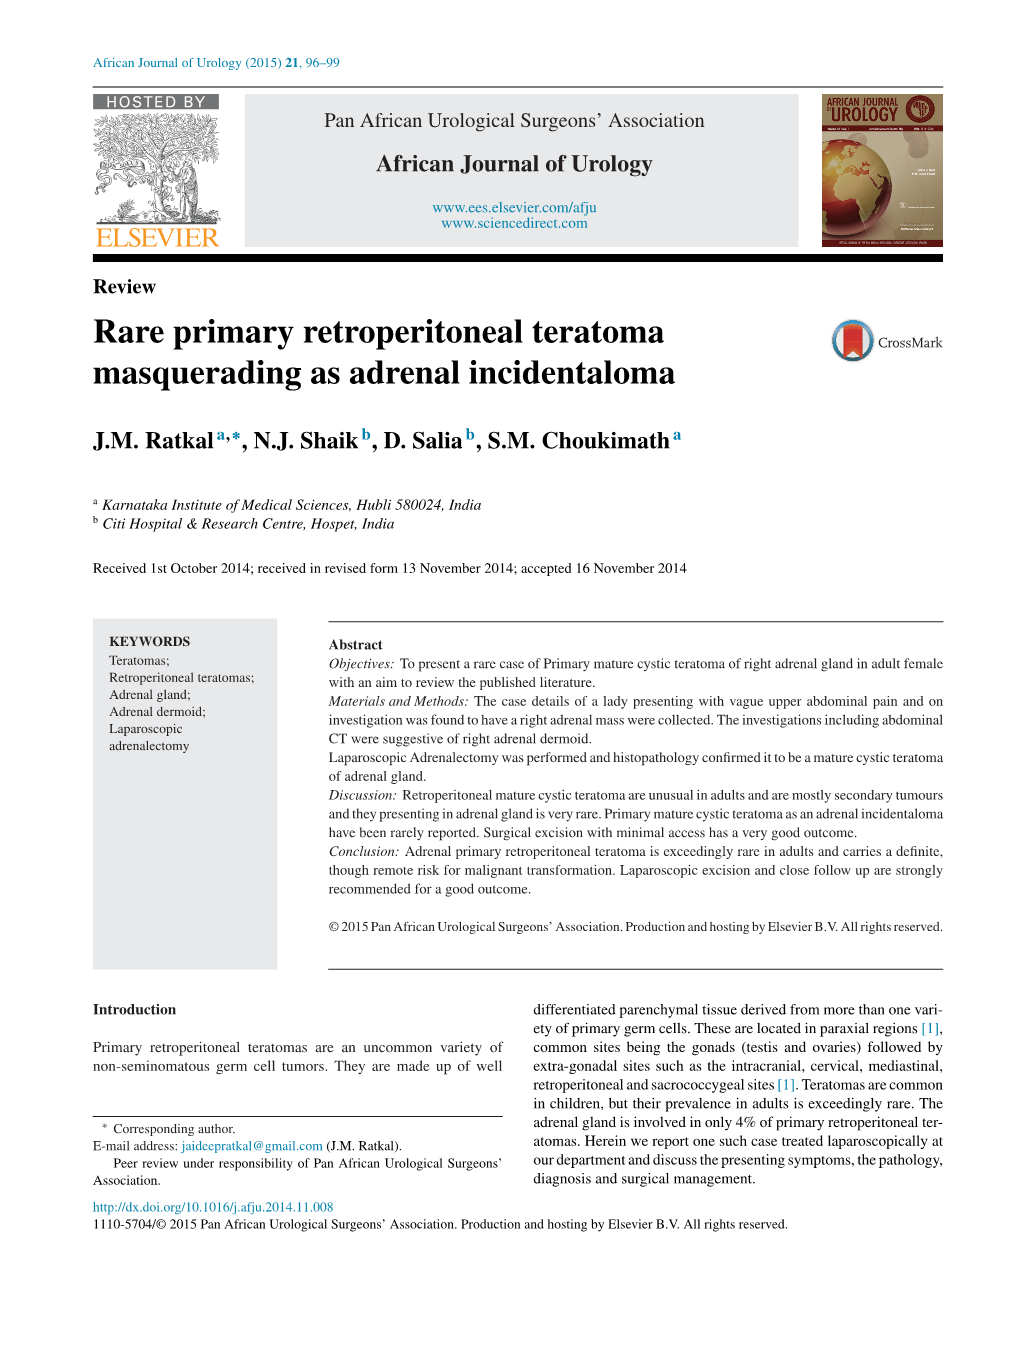 Rare Primary Retroperitoneal Teratoma Masquerading As Adrenal